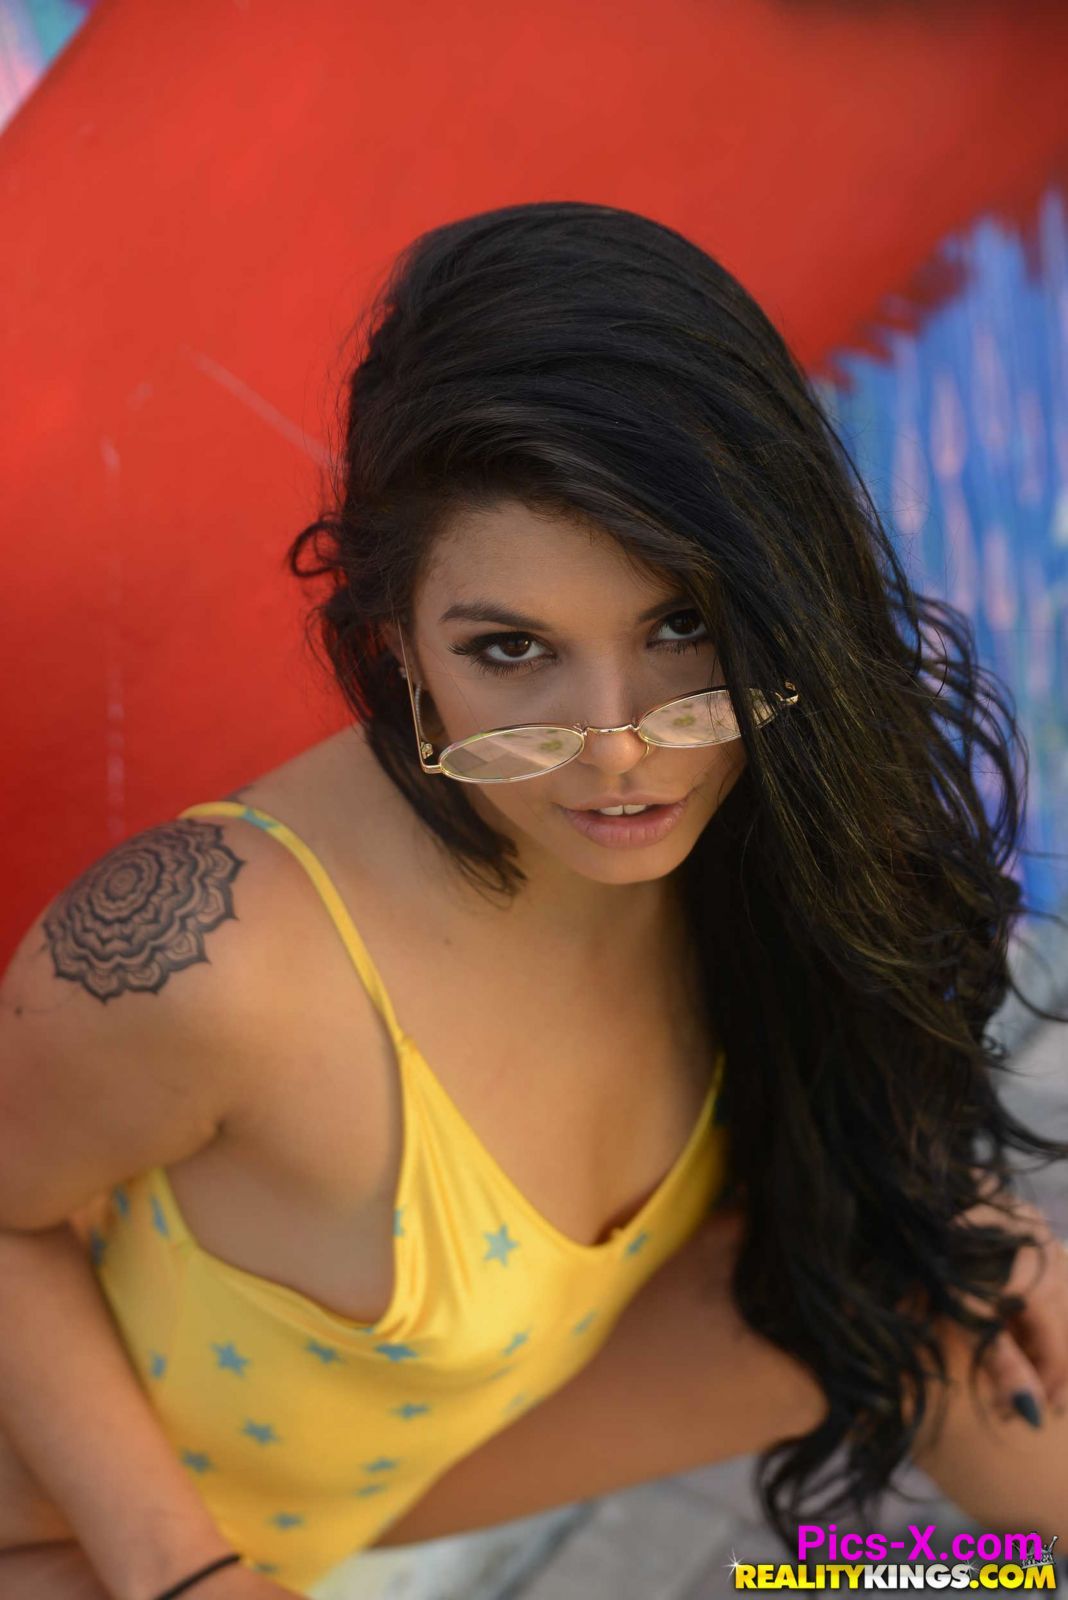 One Crazy Sexy Latina - RK Prime - Image 3